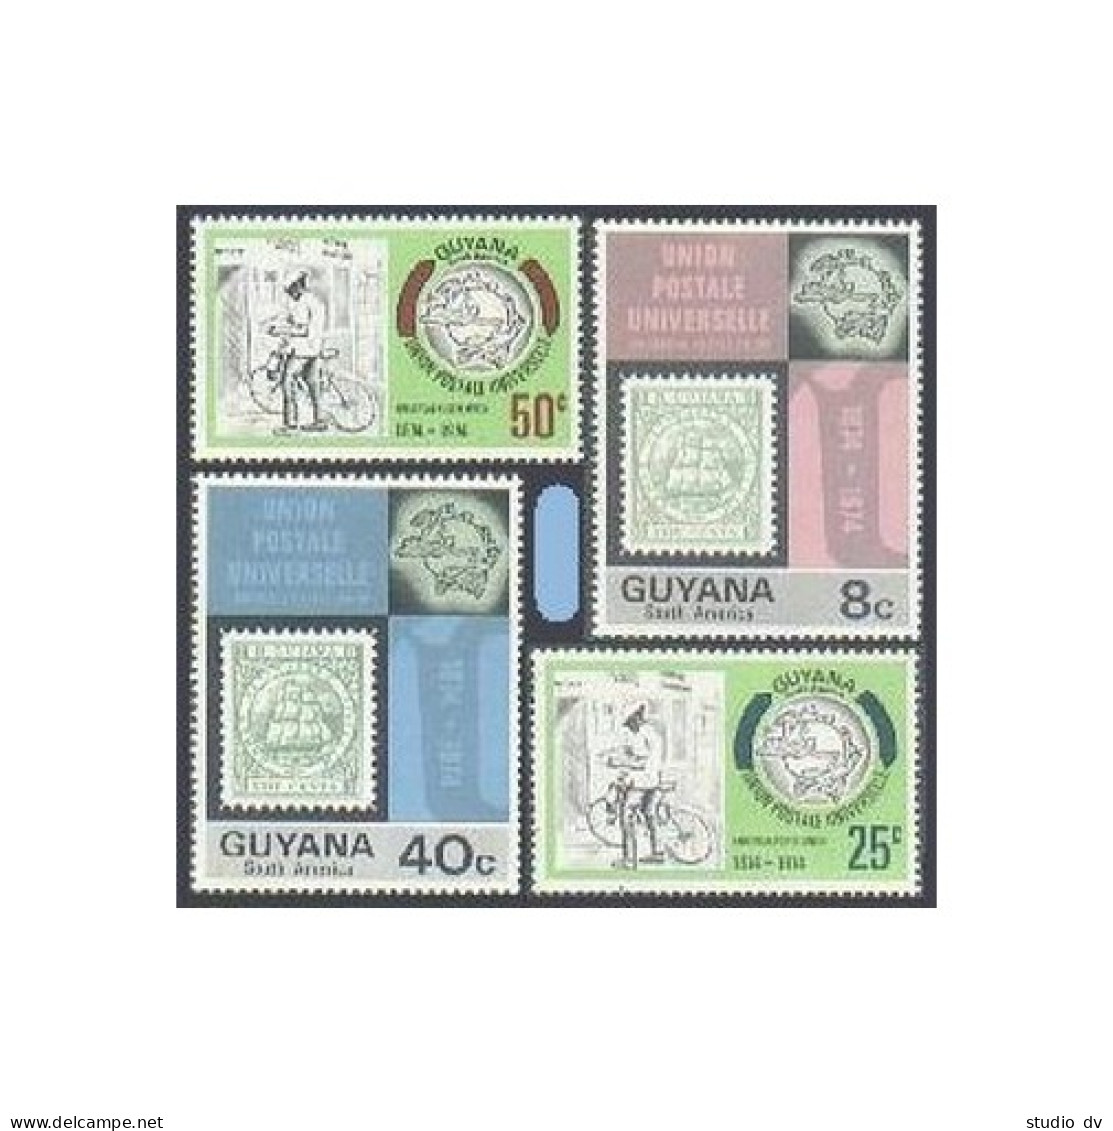 Guyana 197-200,MNH.Michel 460-463. UPU-100,1974.Sailing Ship,Stamp On Stamp. - Guyana (1966-...)